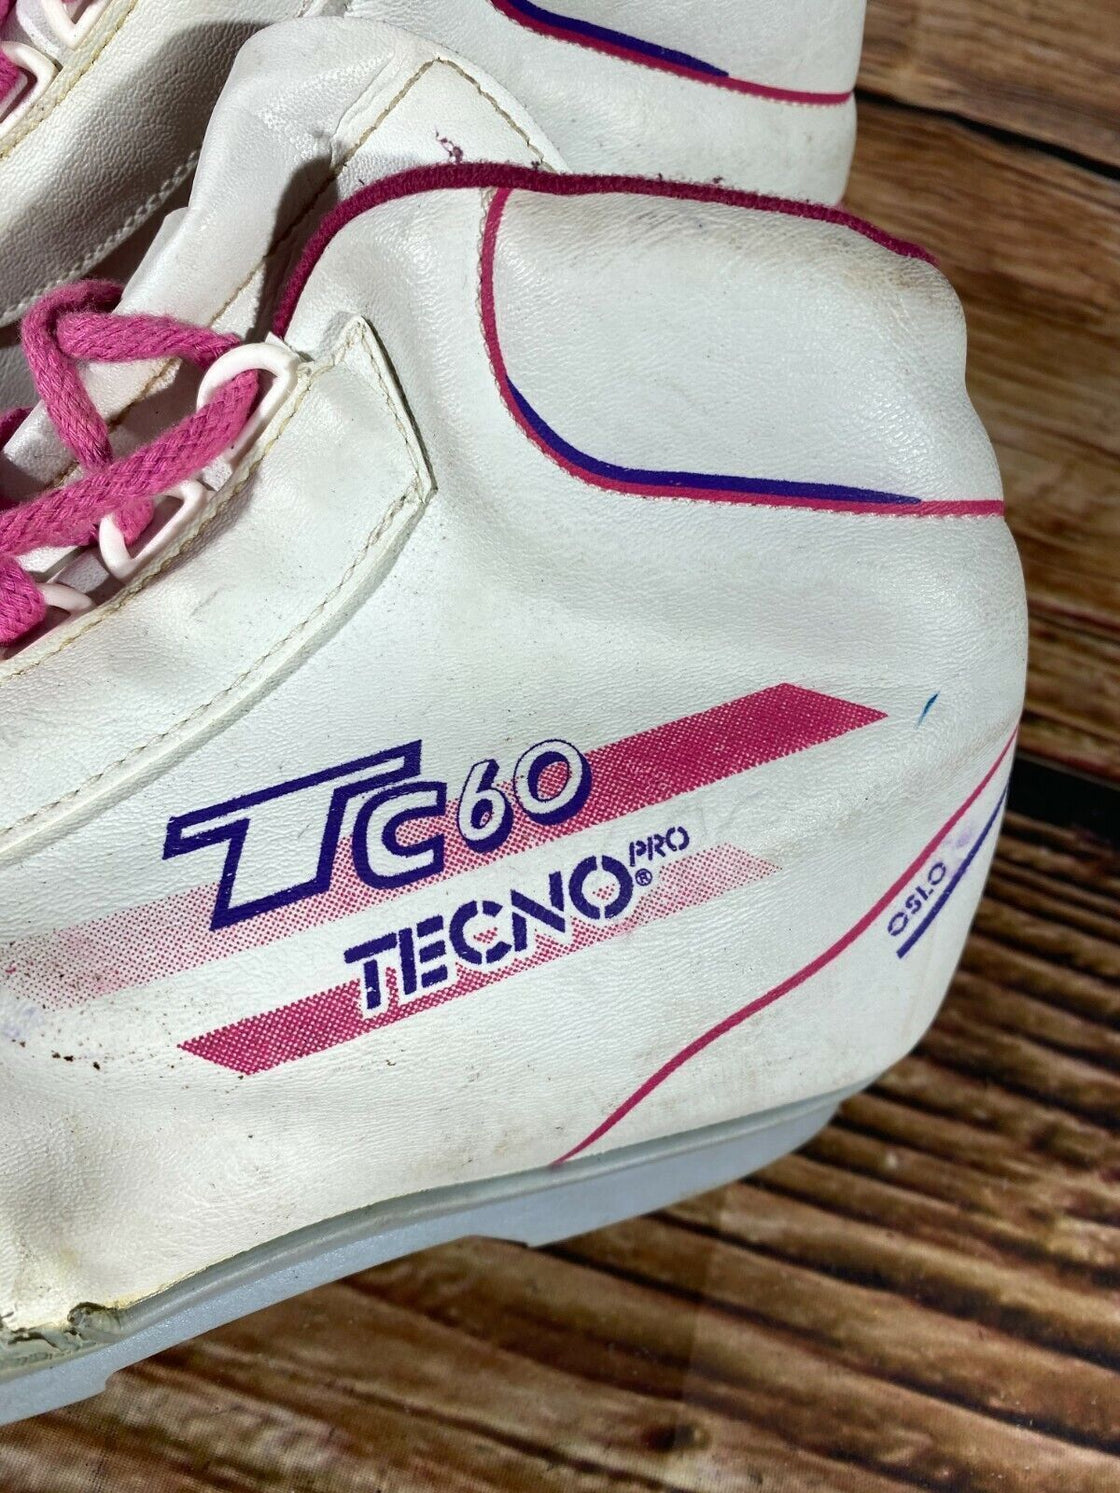 TECNOPRO TC60 Nordic Cross Country Ski Boots Ladies Size EU39 US7 SNS Old Profil